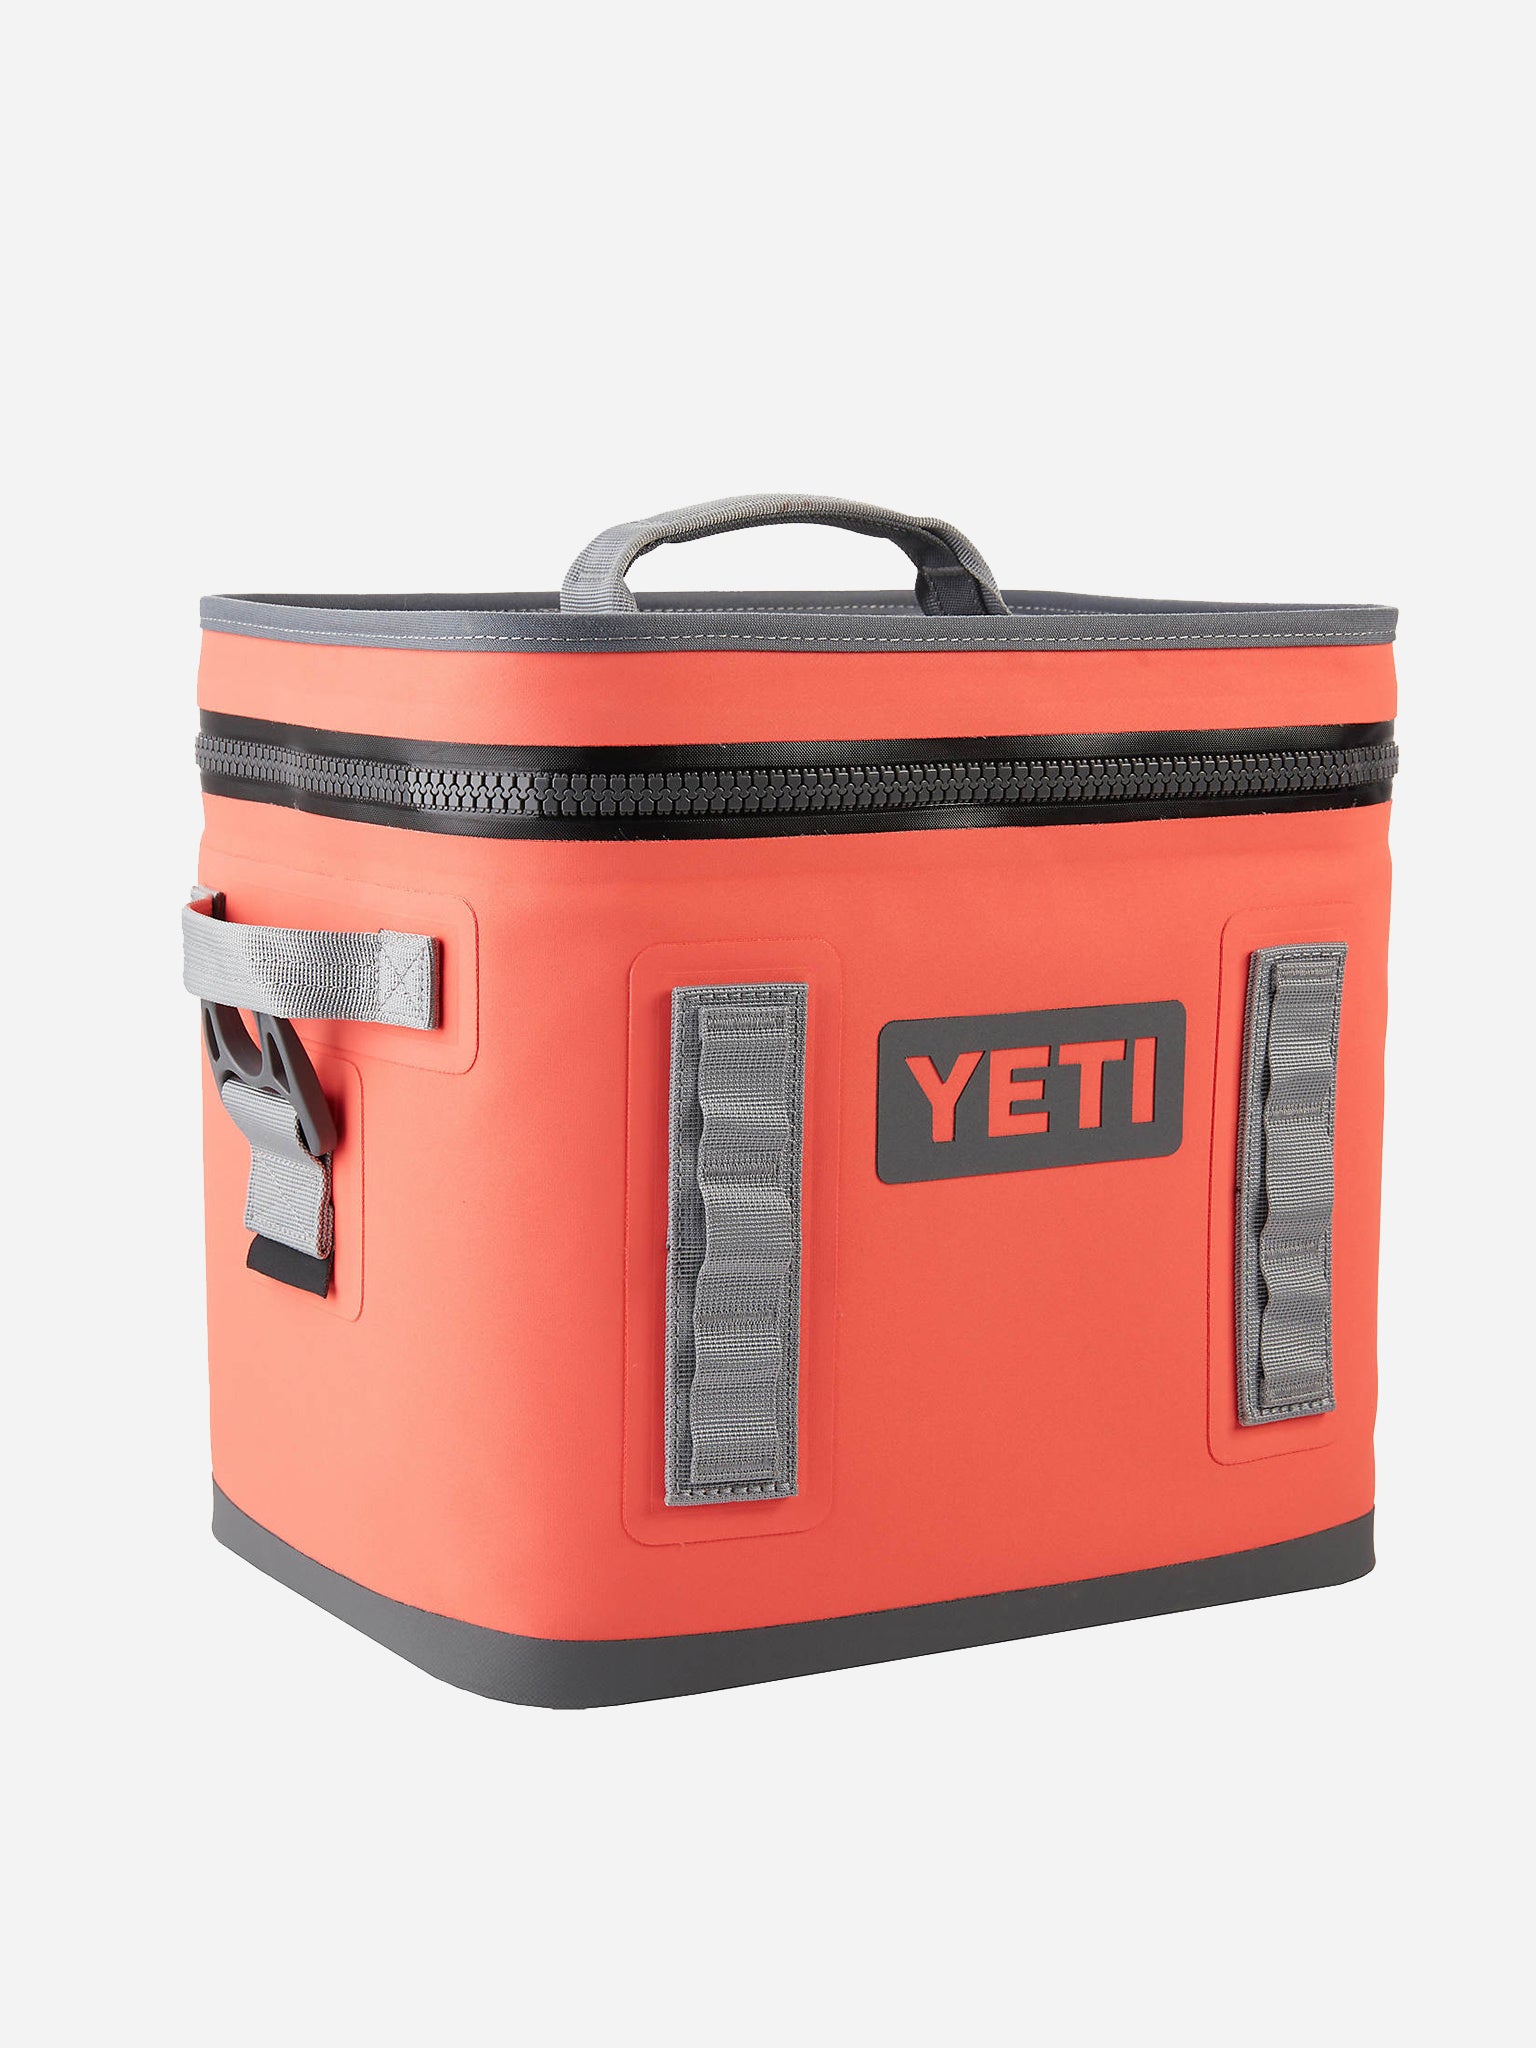 YETI Hopper Flip 12 Cooler with Top Handle